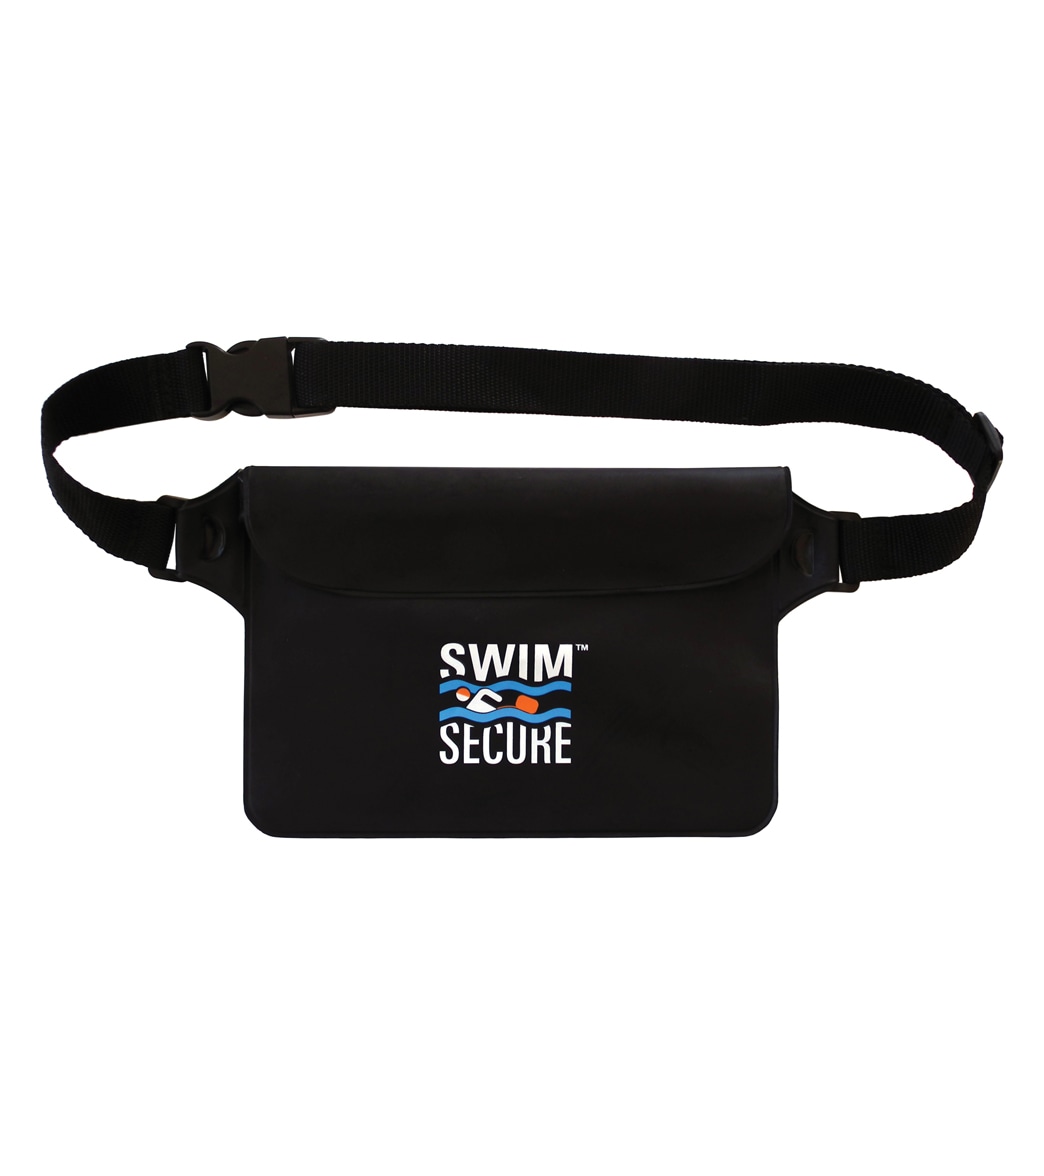 Swim Secure Waterproof Bum Bag - Black - Swimoutlet.com